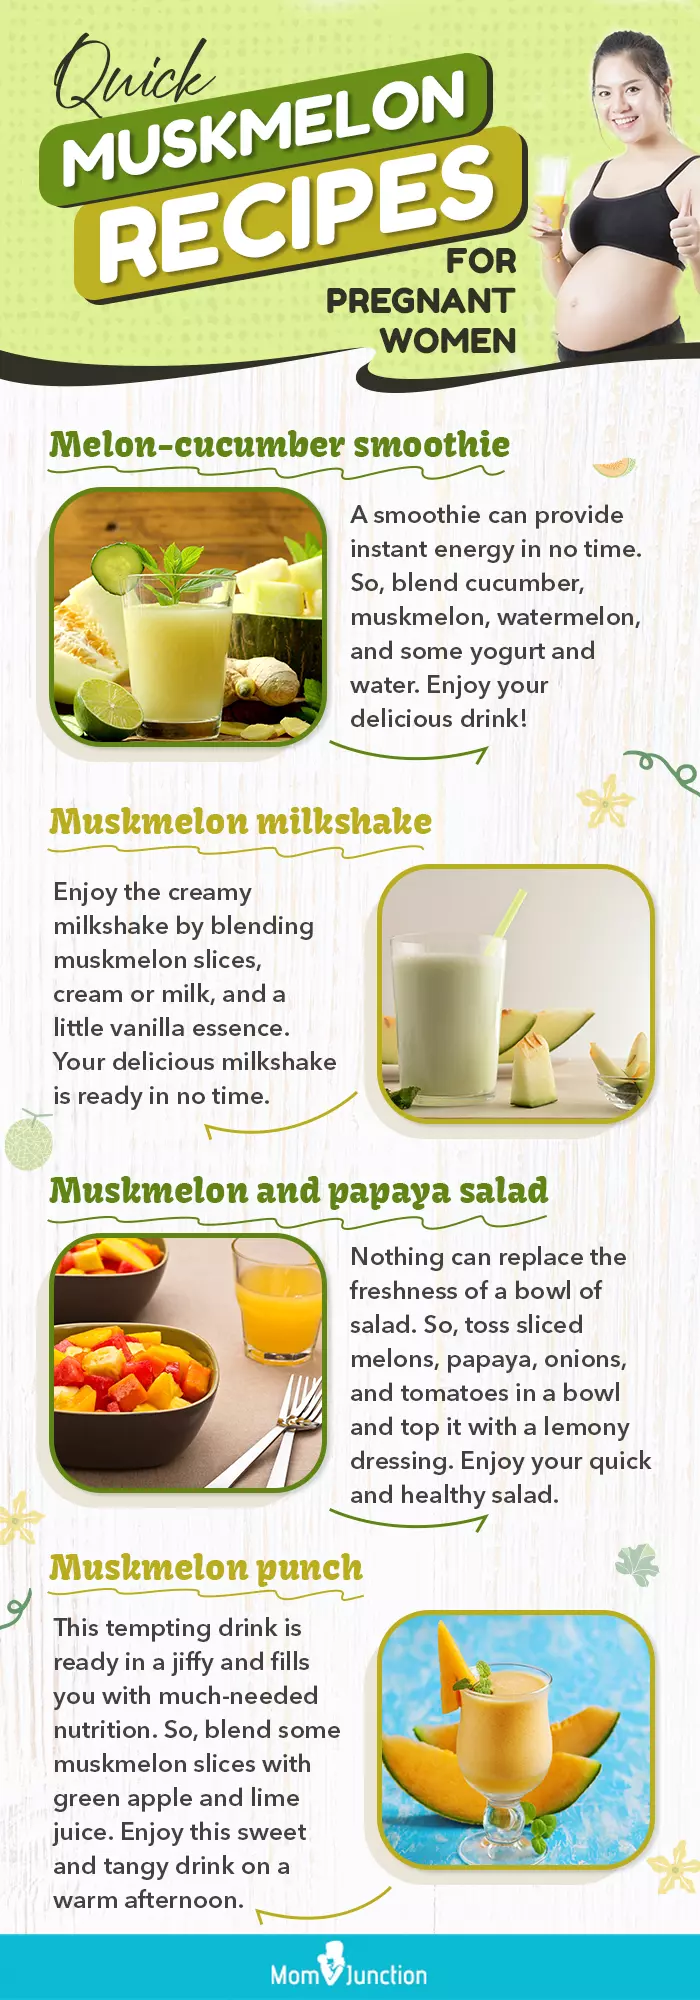 quick muskmelon recipes for pregnant women (infographic)